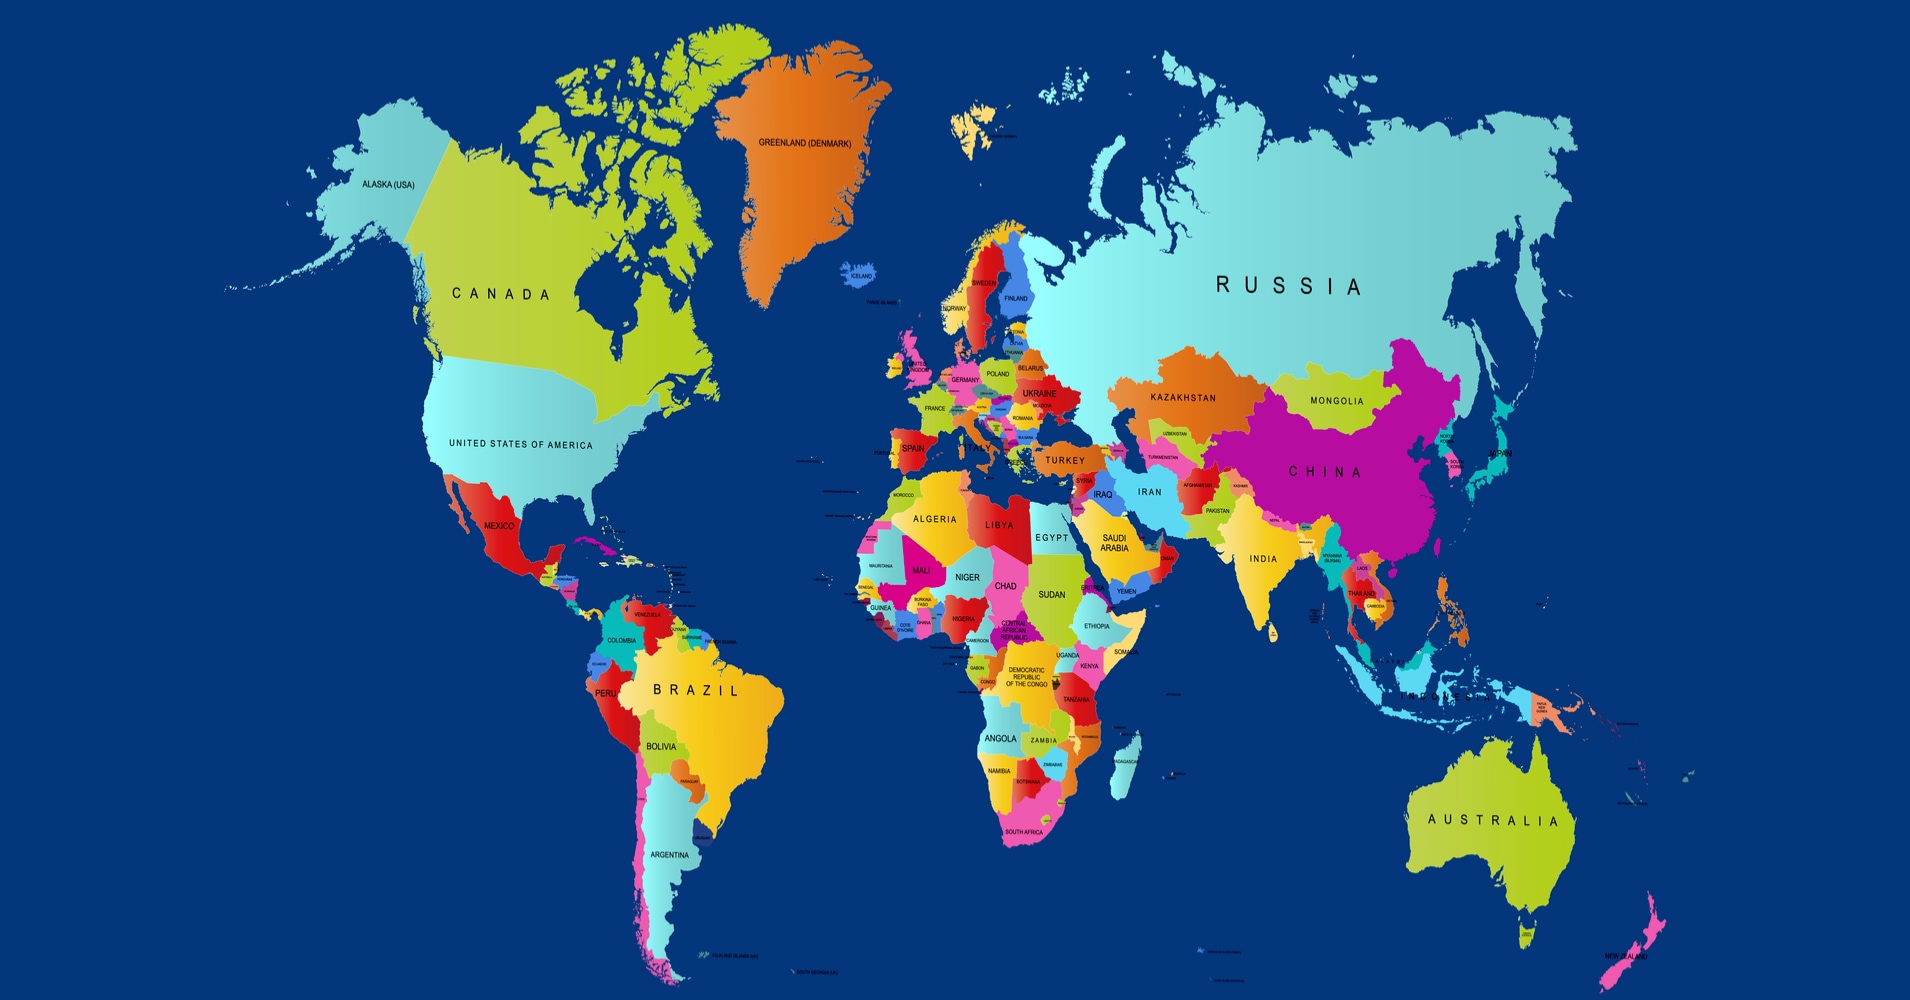 World Geography Quiz - Quiz - Quizony.com